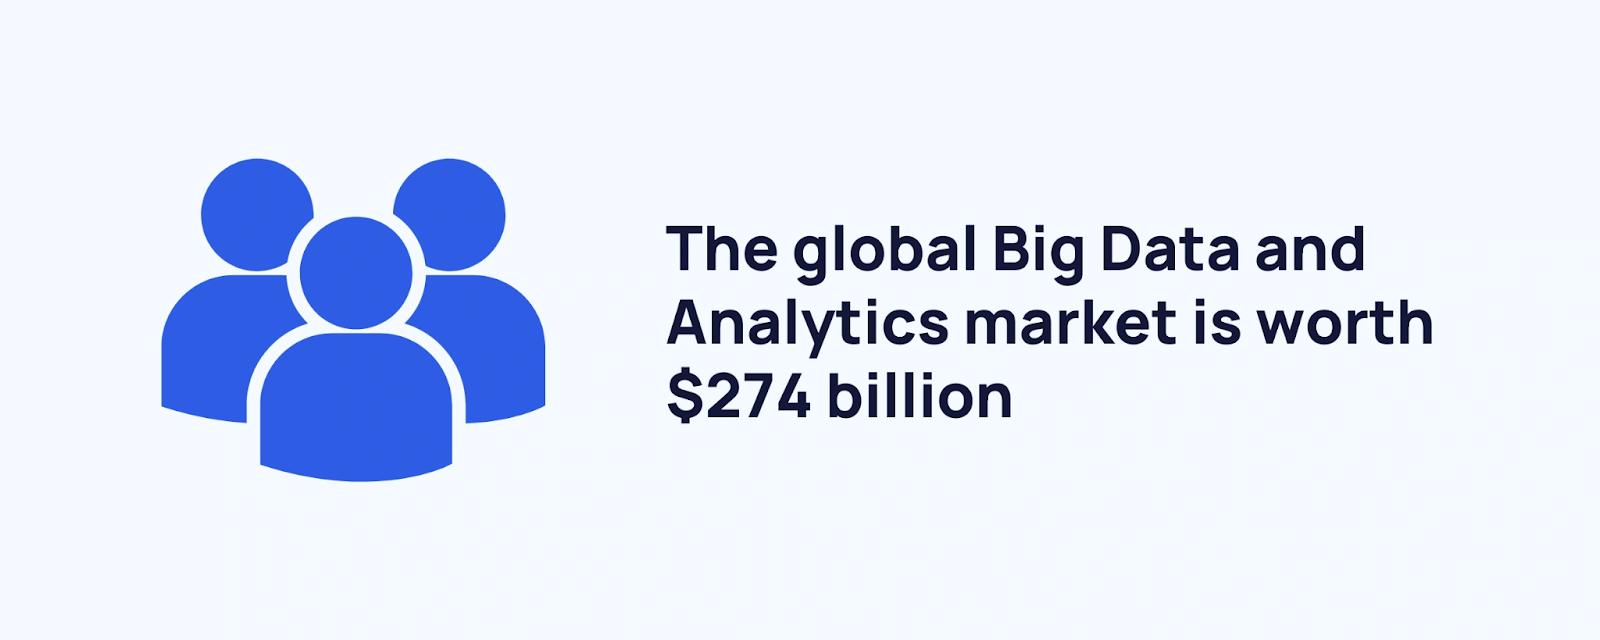 Big Data and Analytics have a value of around $274 billion